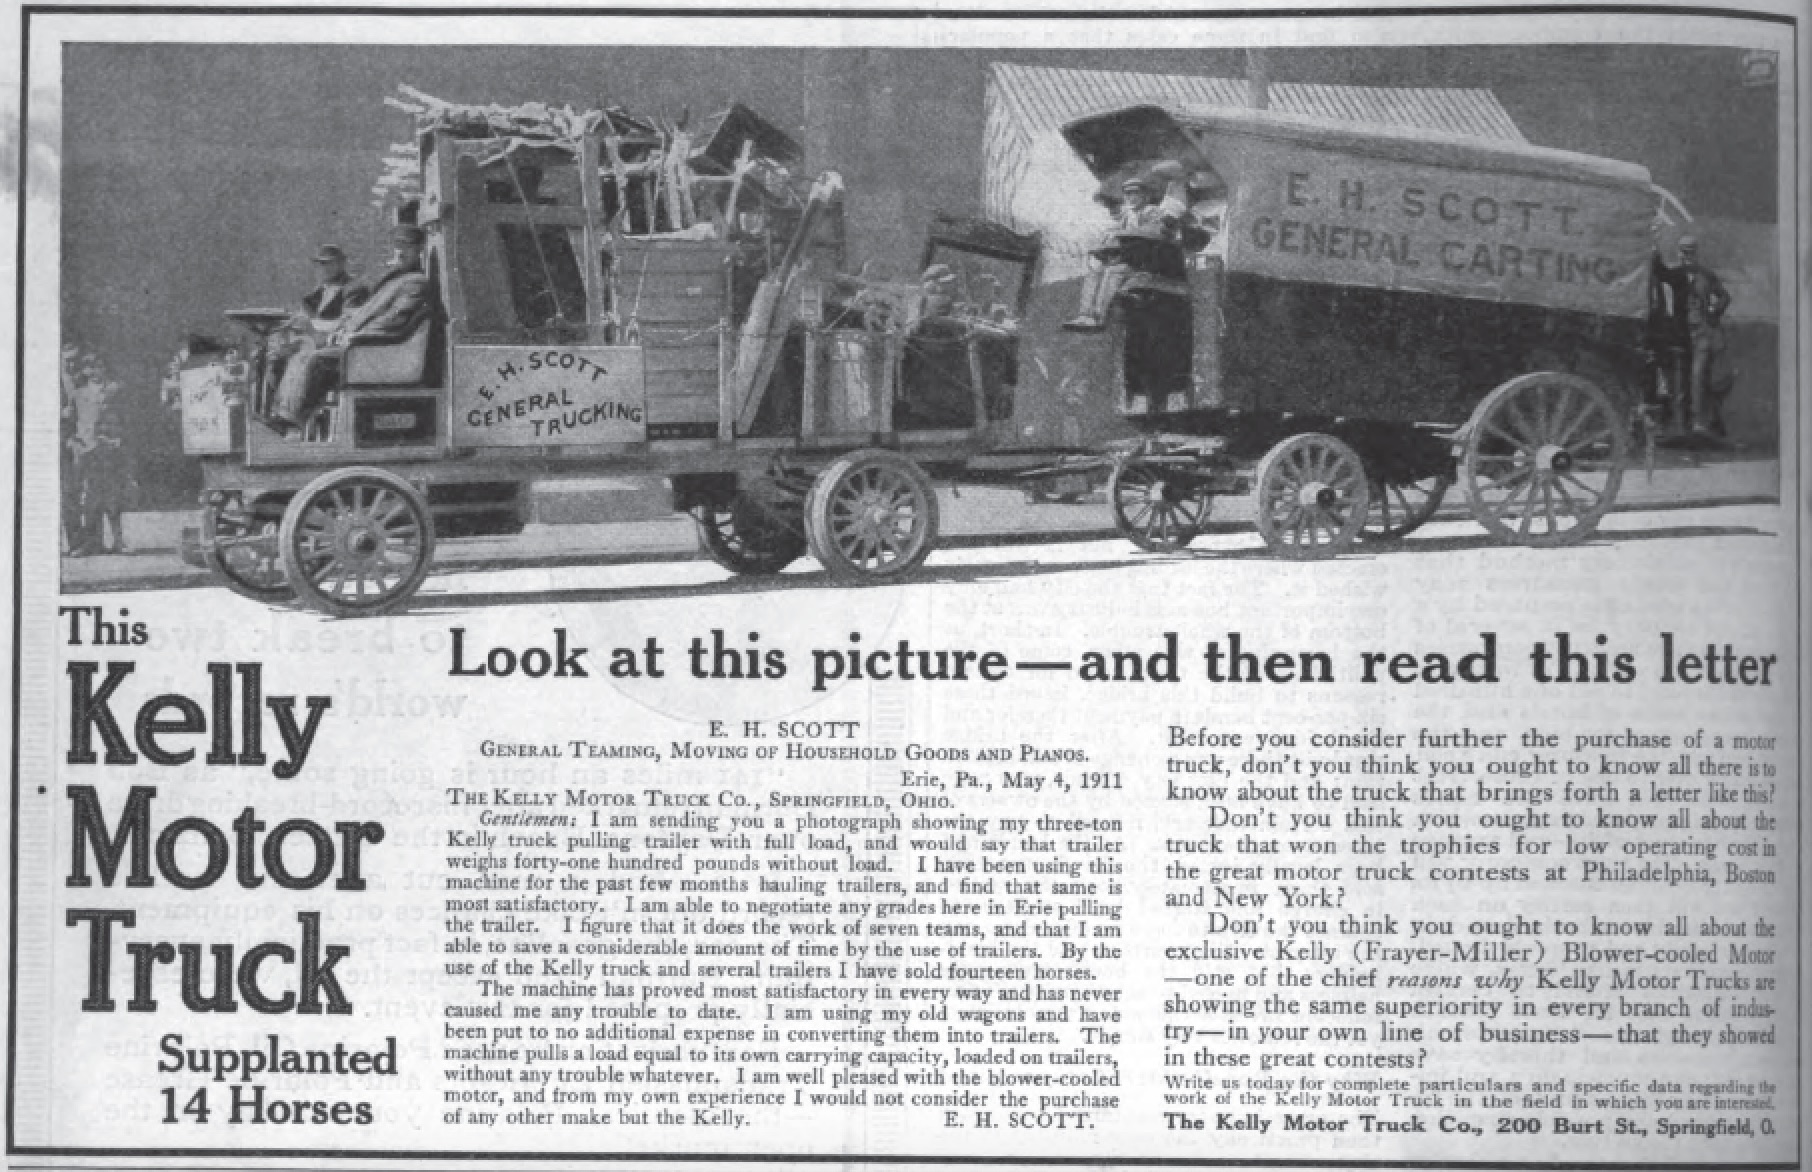 2. Saturday Evening Post ad featuring E.H. Scott Trucking 6 24 1911